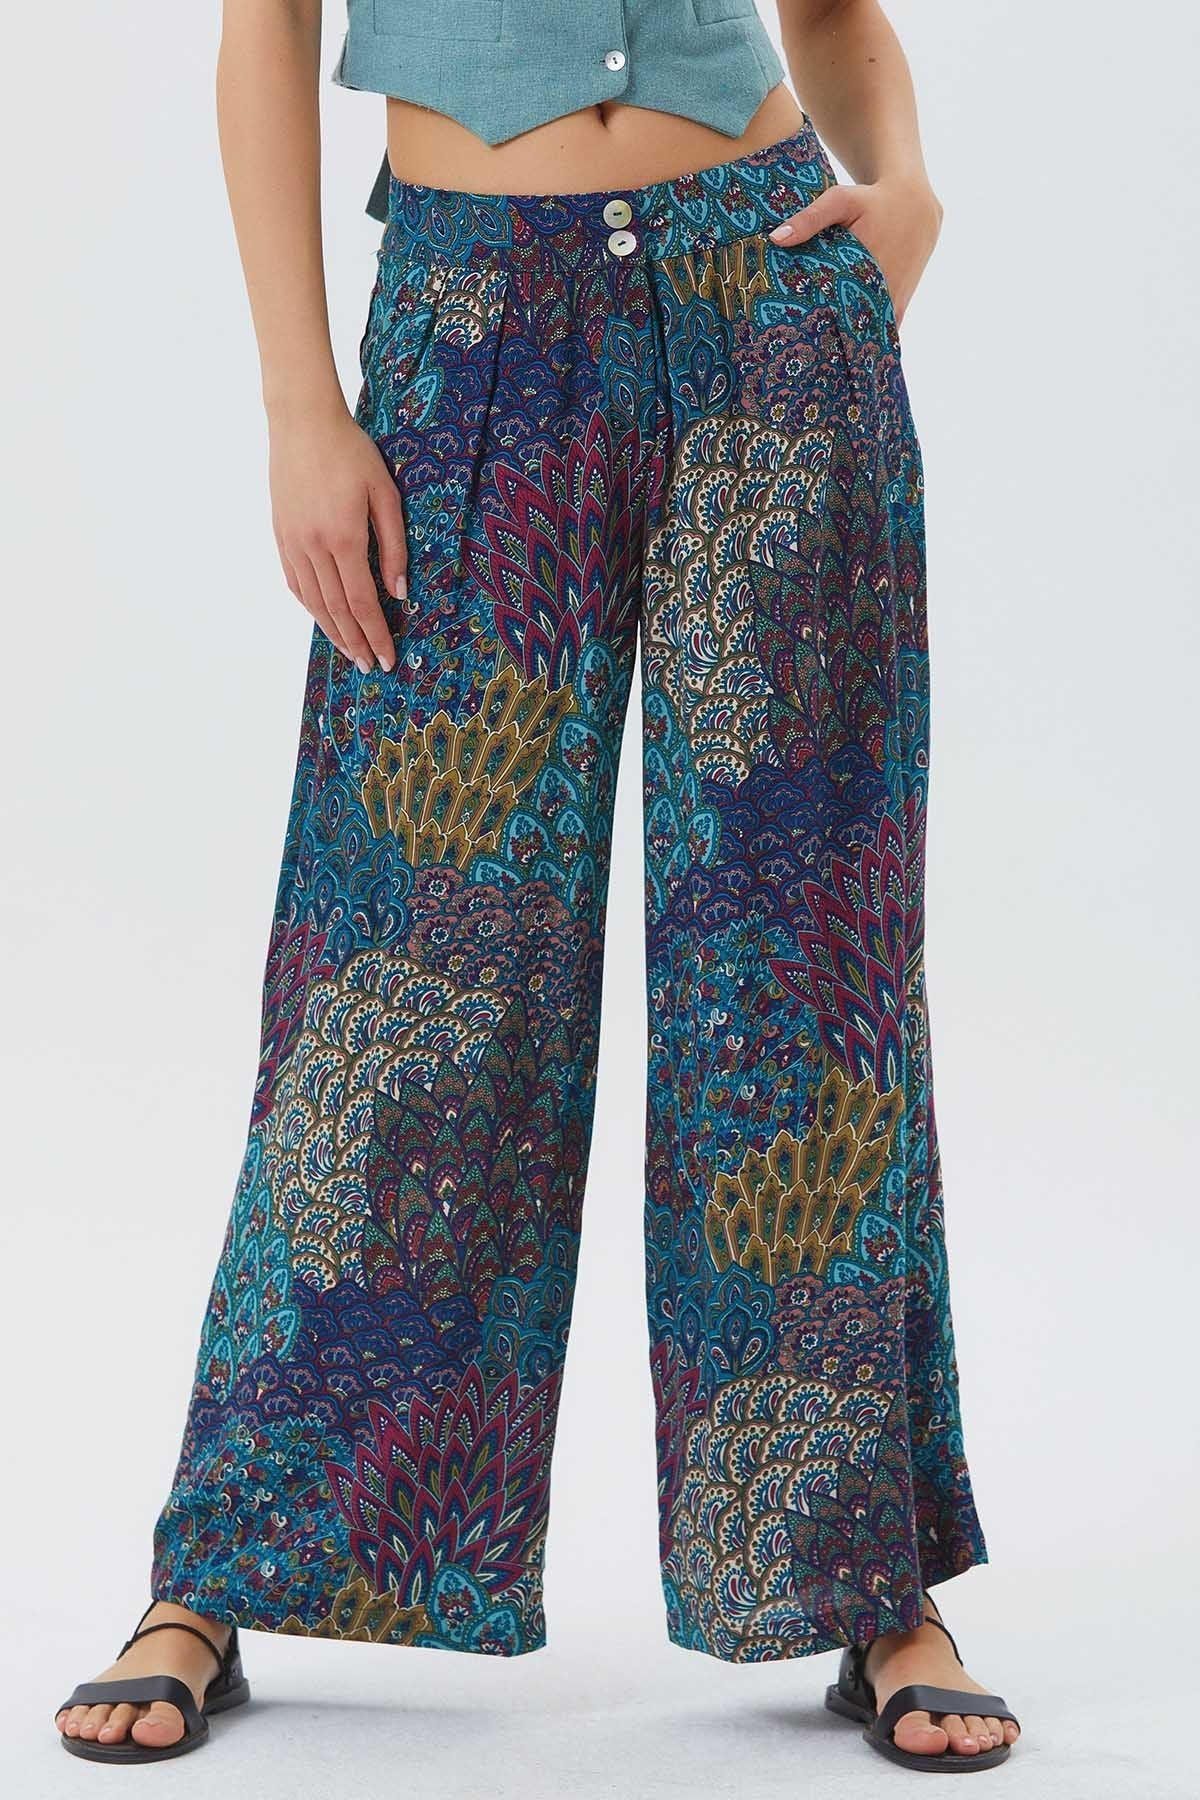 Boho Women's Pants Turquoise